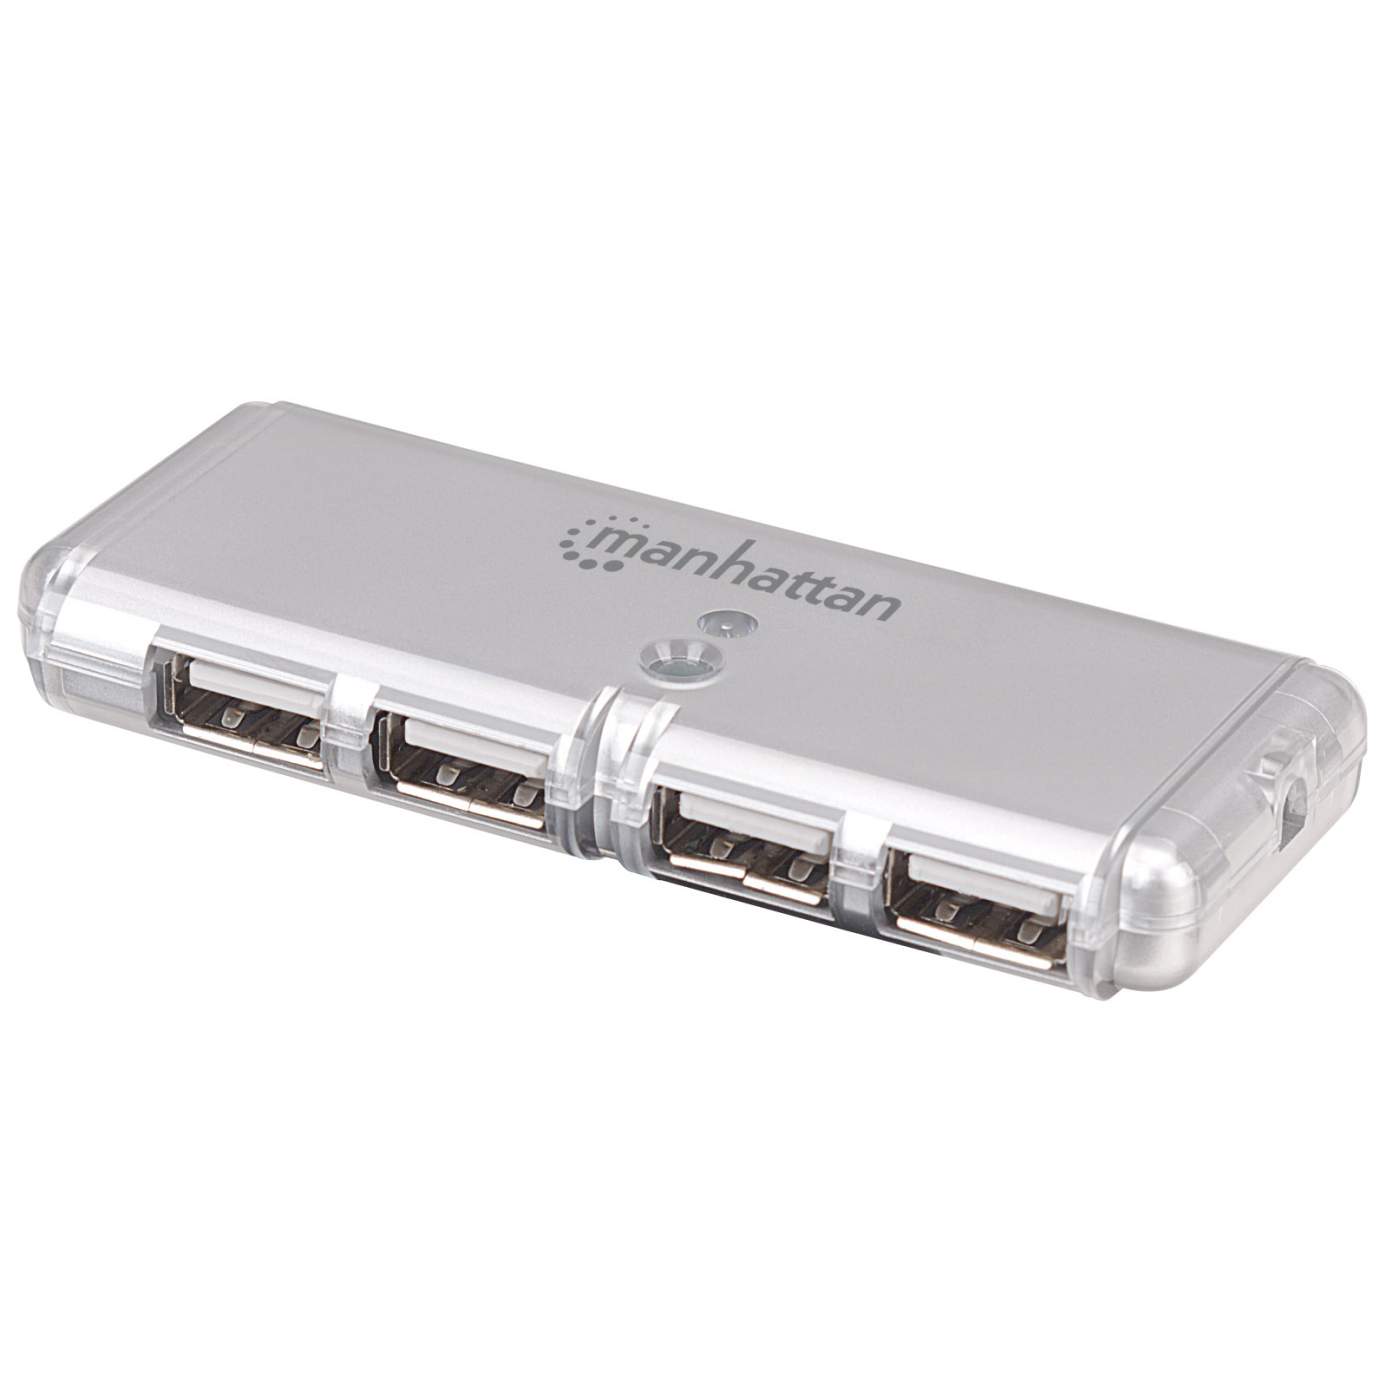 Manhattan 160599 USB 2.0 4-Port Hub